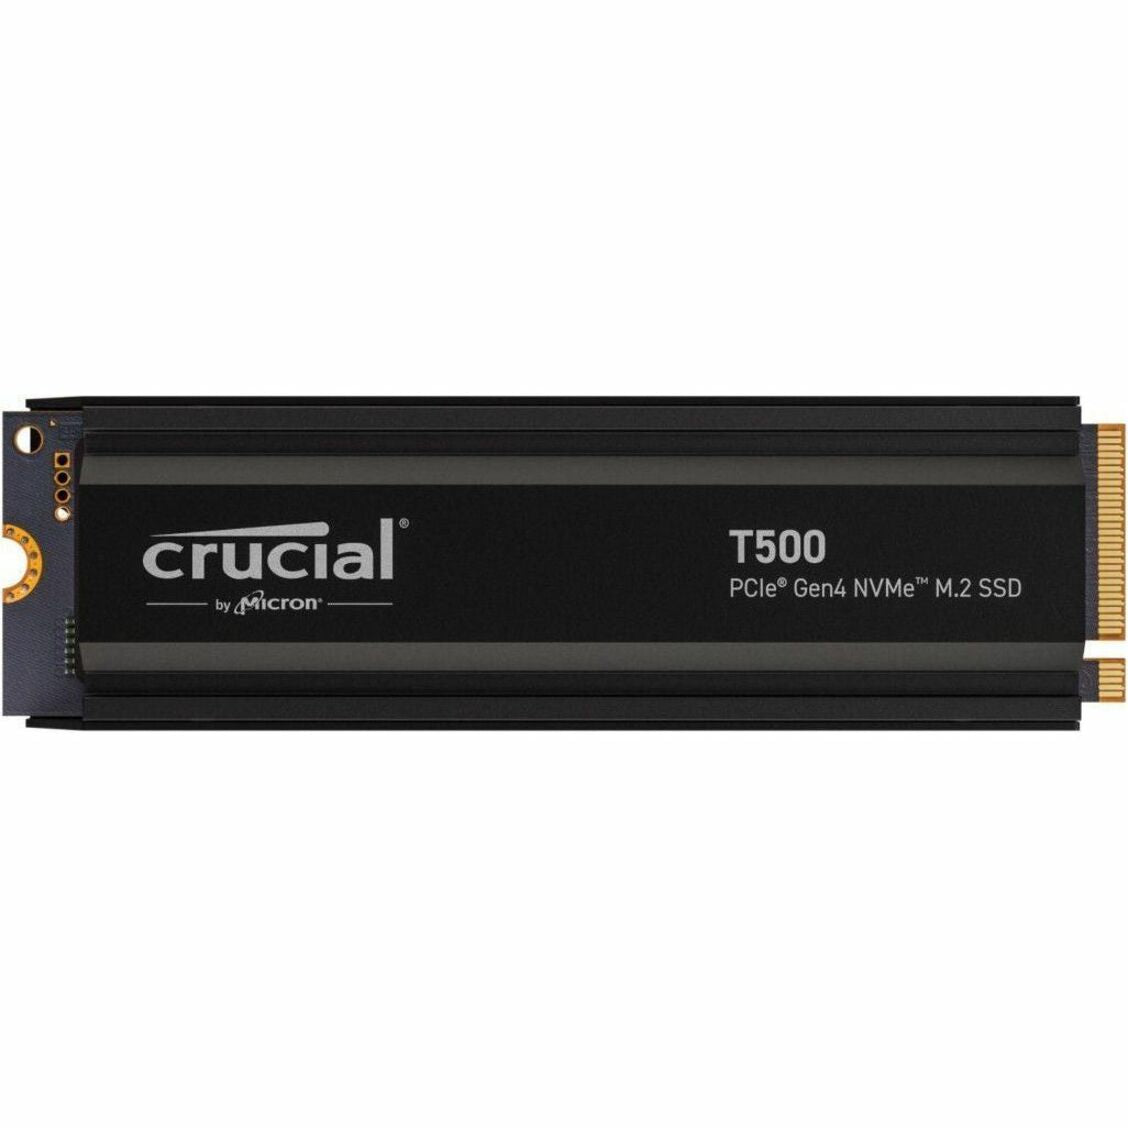 Crucial T500 500GB PCIe Gen4 NVMe M.2 SSD, CT500T500SSD8